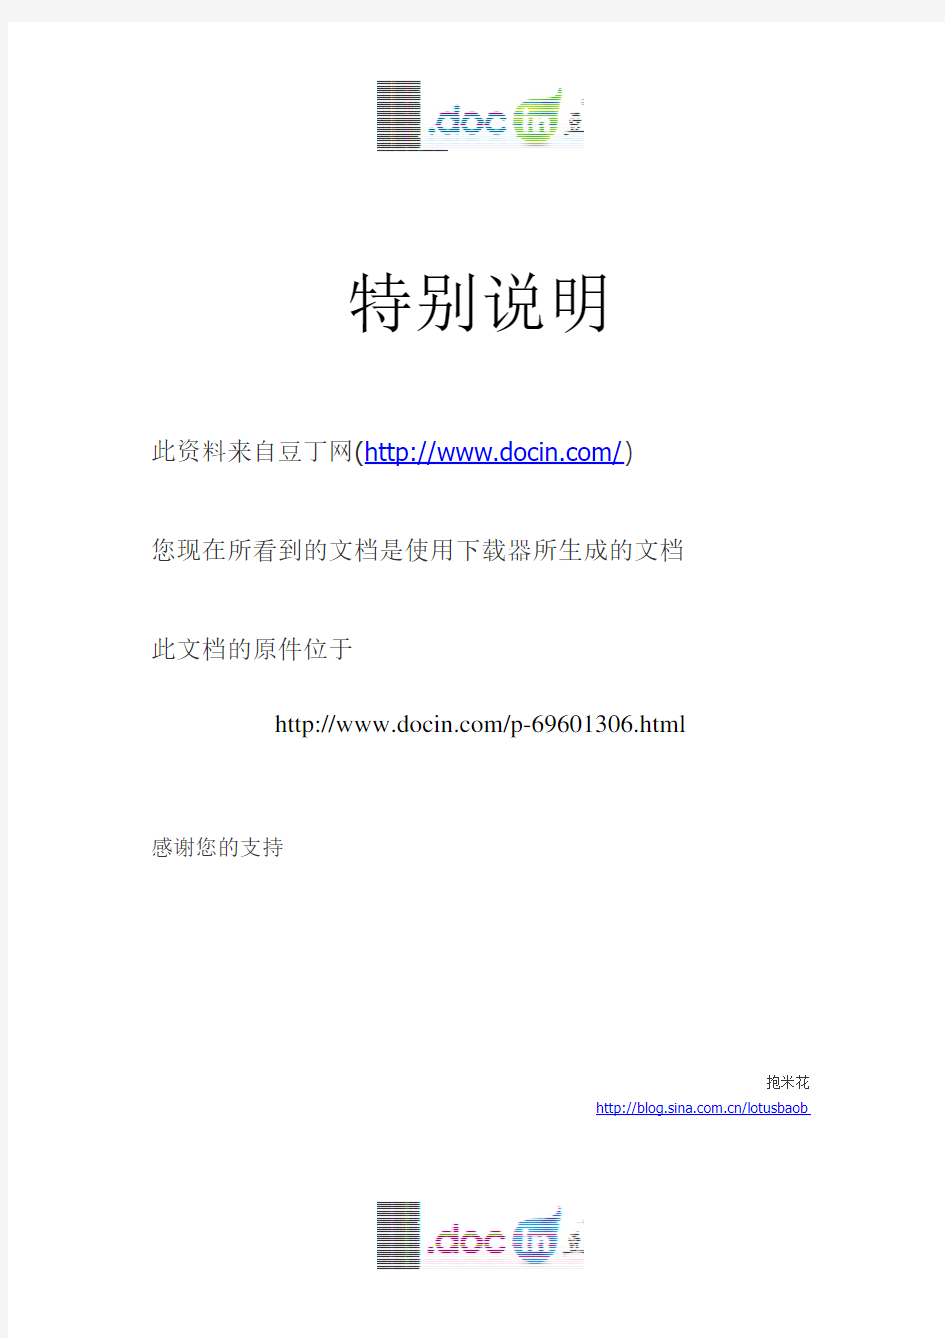 Snort(入侵检测系统)中文手册